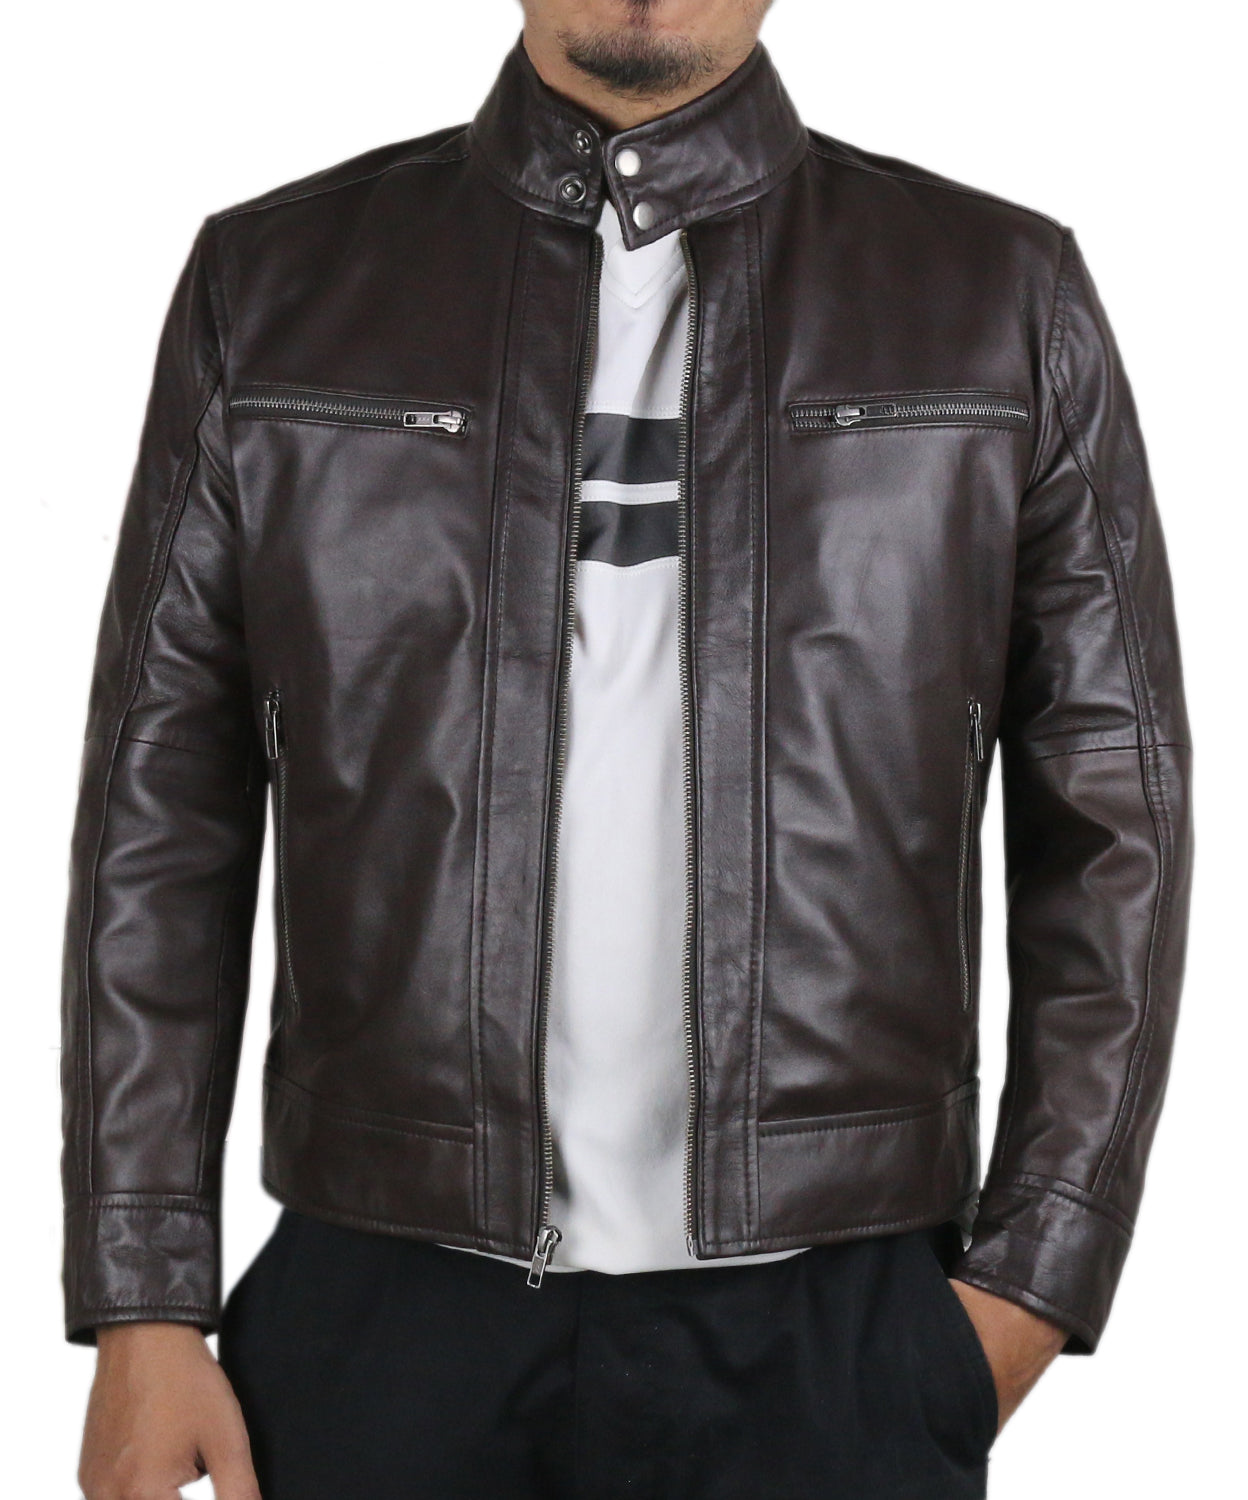 Leather Jackets Hub Mens Genuine Cowhide Leather Jacket (Black, Racer Jacket) - 1501500